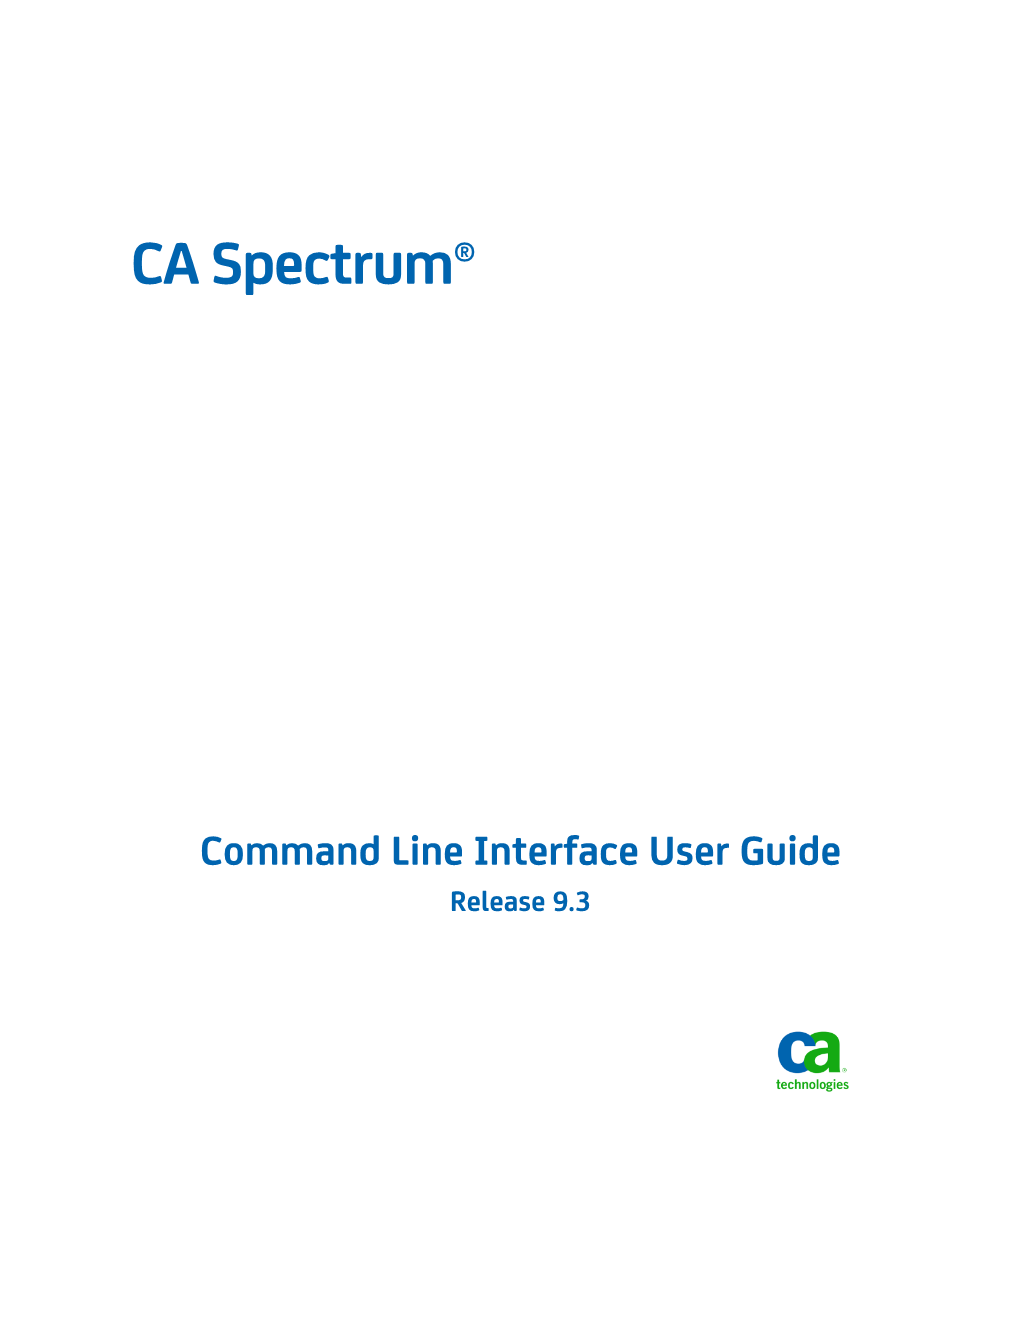 CA Spectrum Command Line Interface User Guide